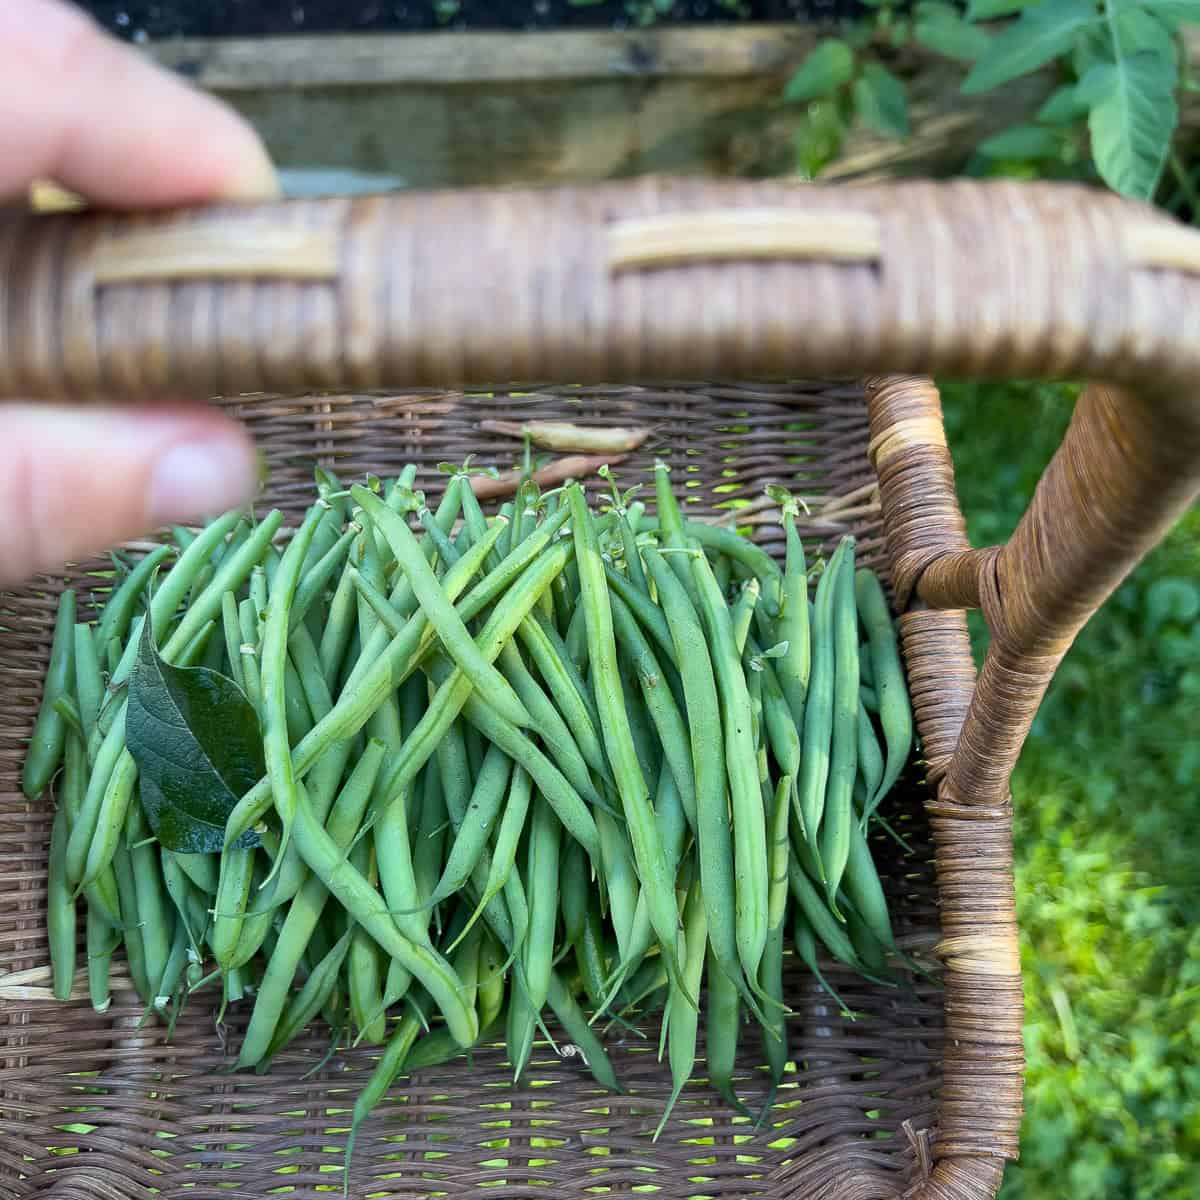 A harvesting basket filled with bush beans.